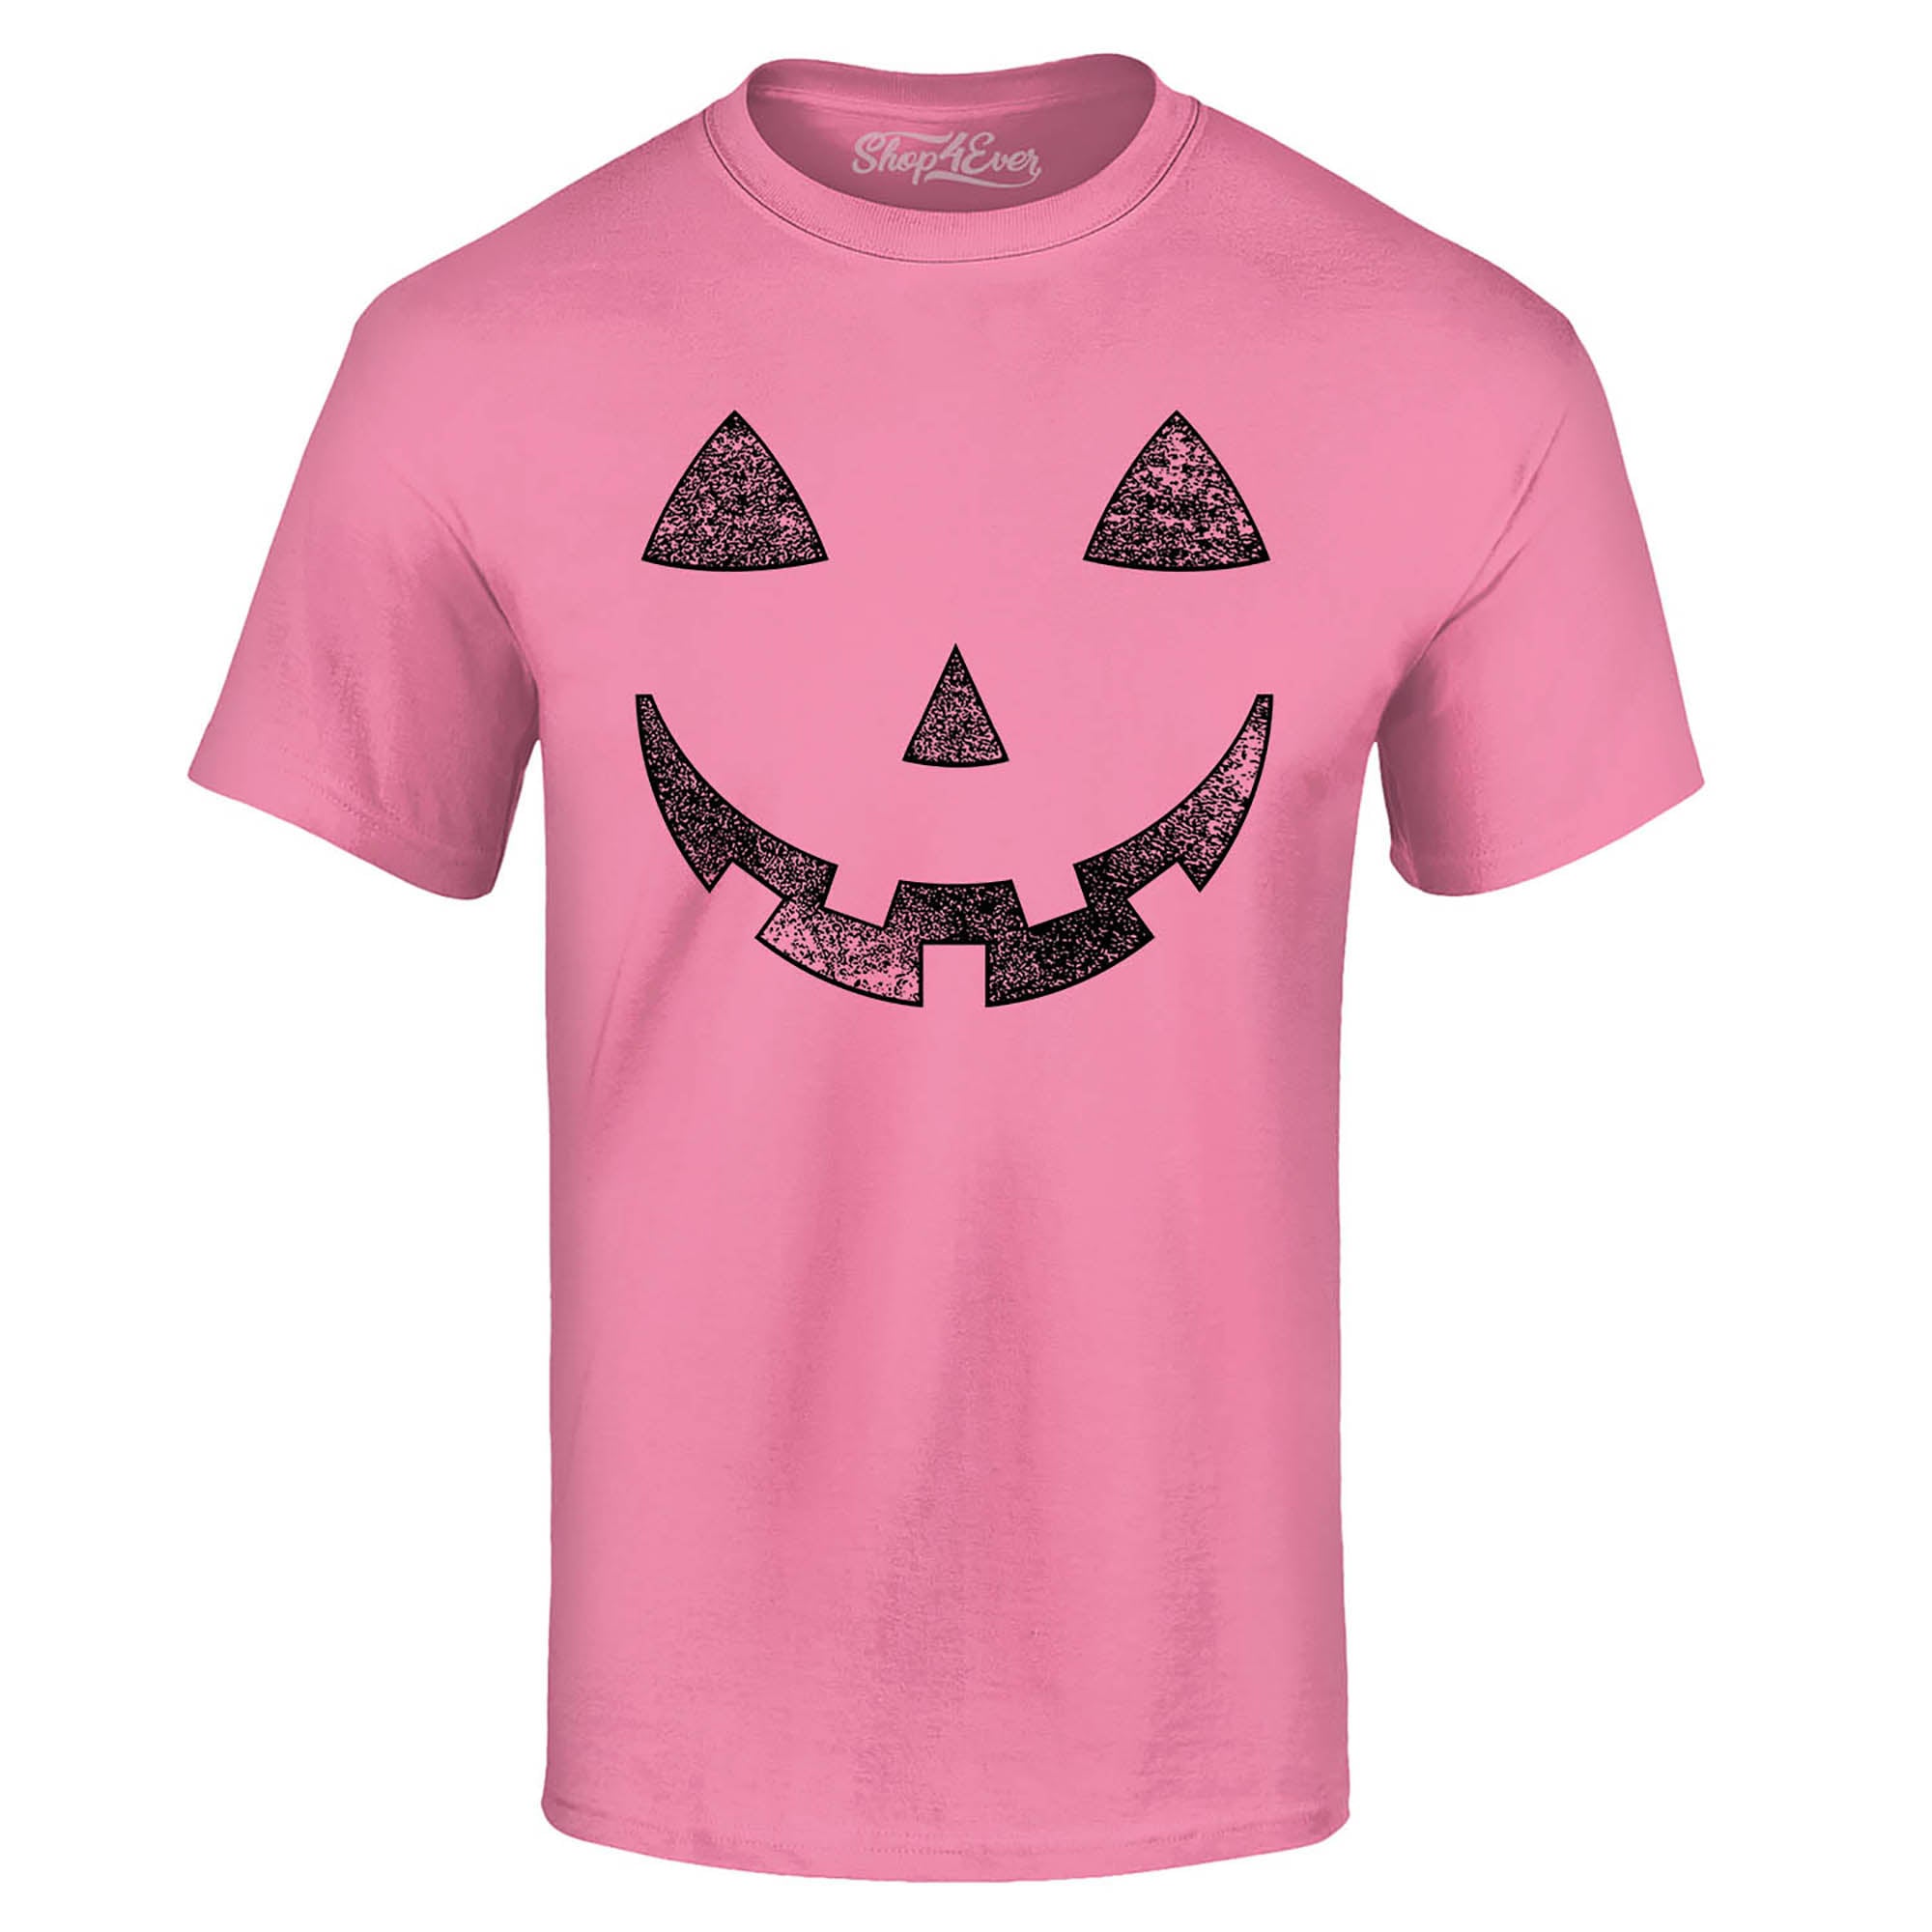 Jack O' Lantern Halloween Pumpkin Costume T-Shirt